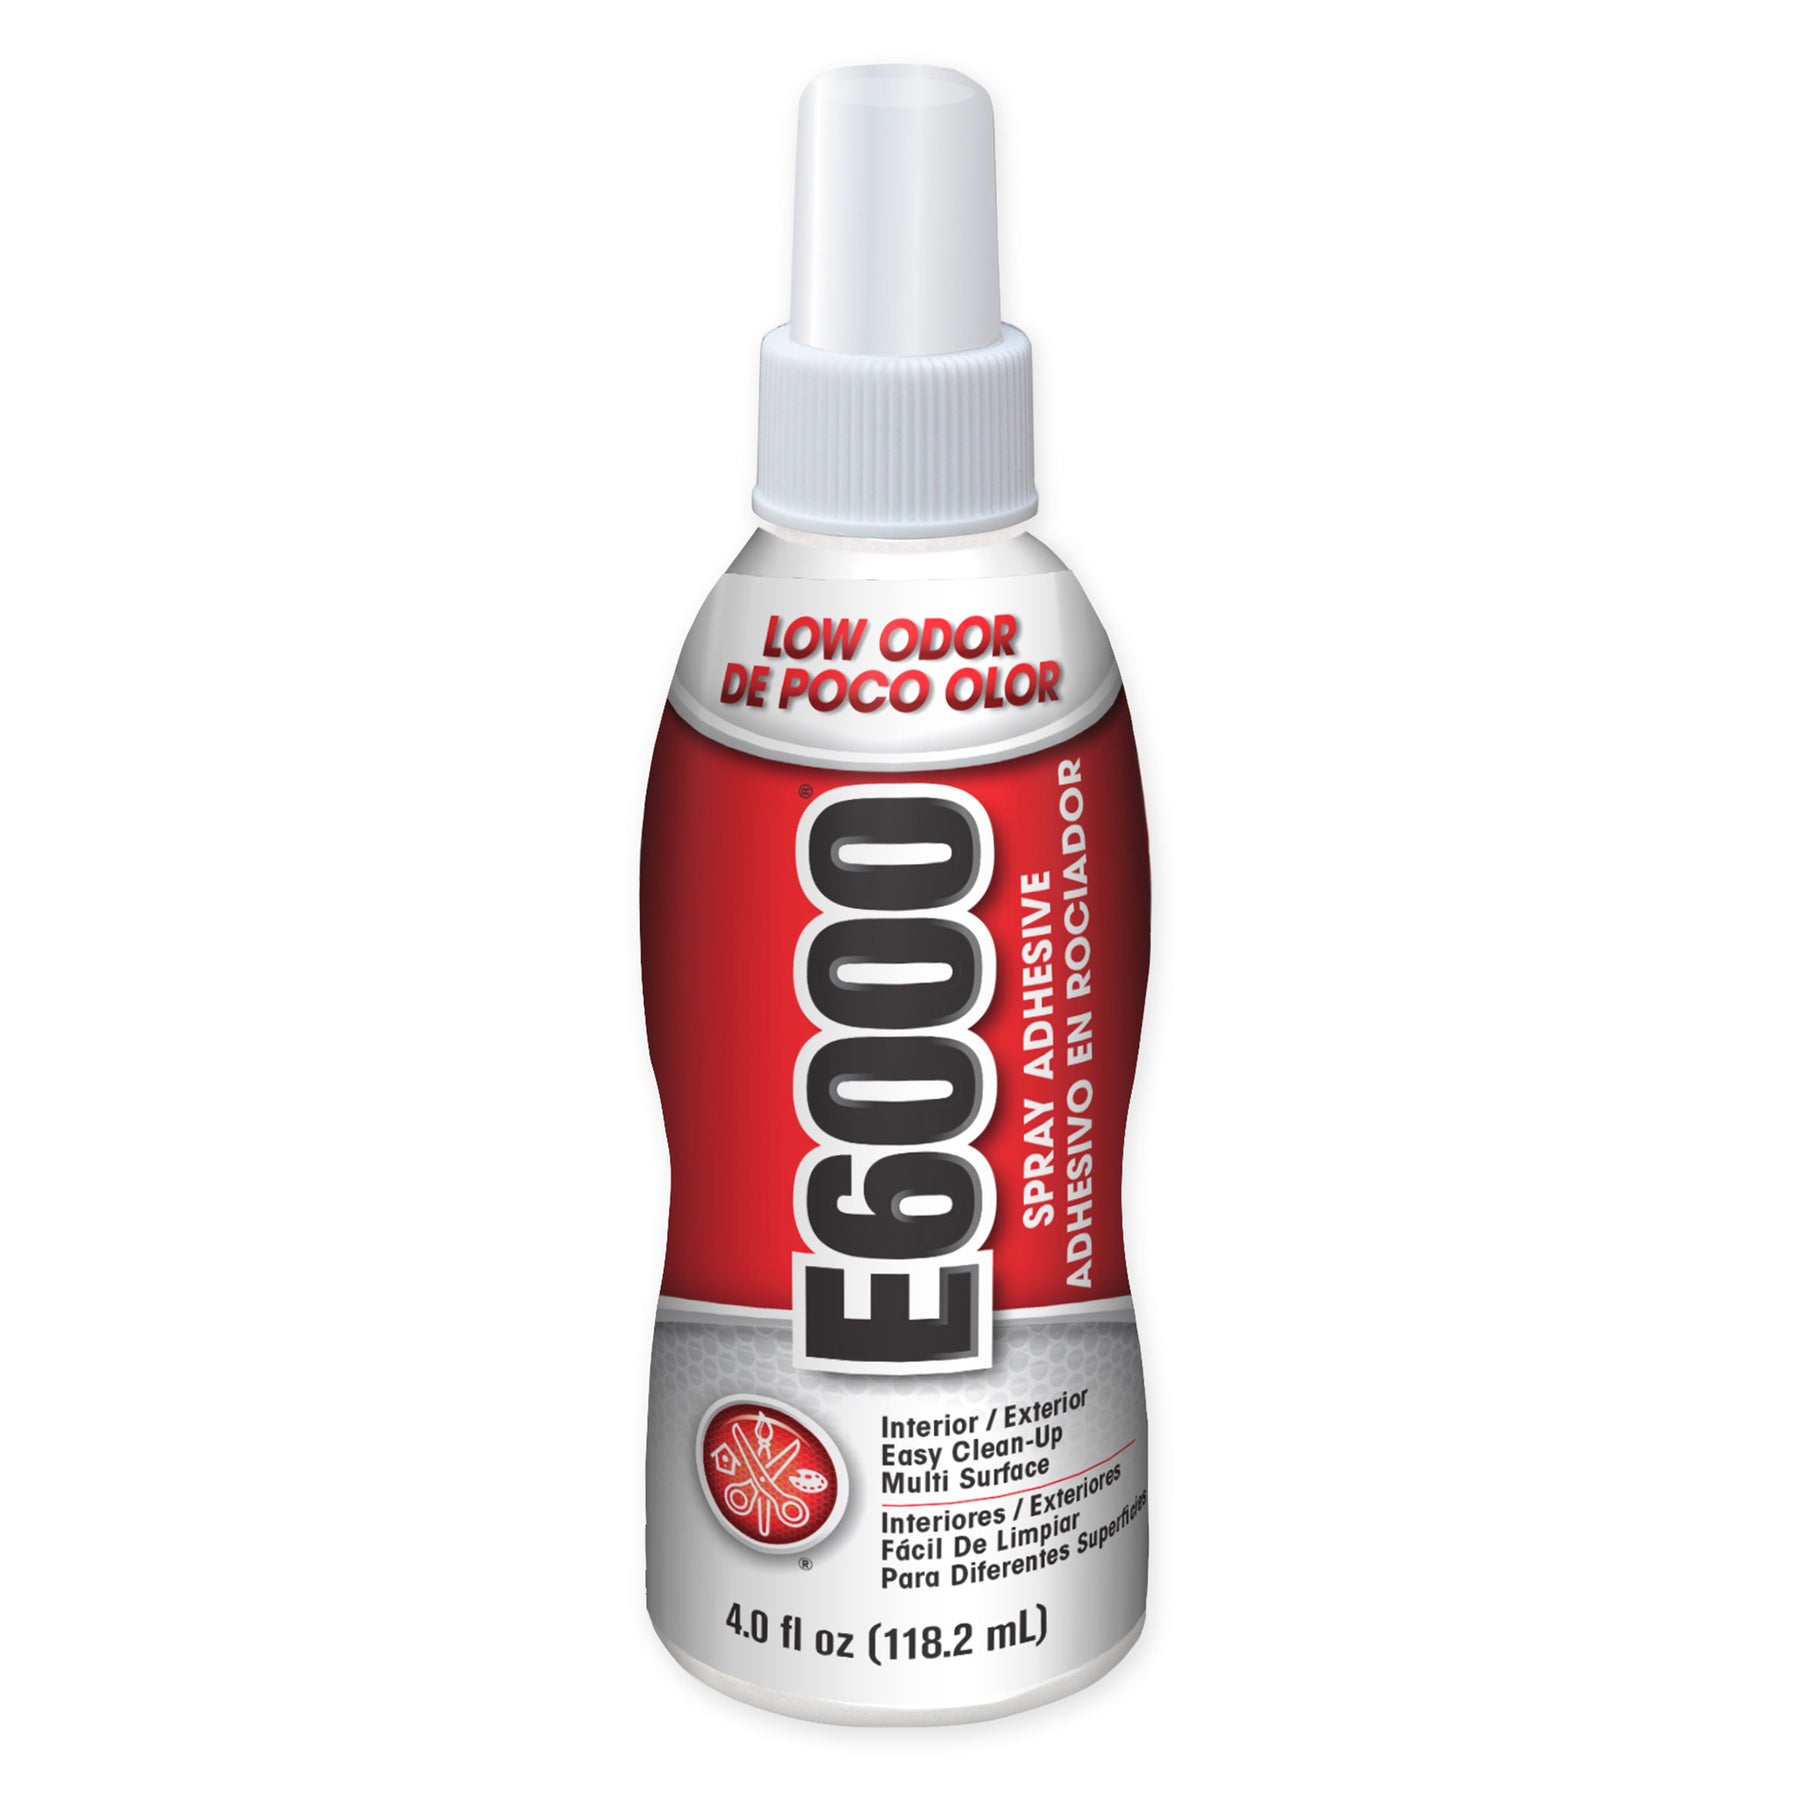 E-6000, Permanent Bond Glue - 2.0 fl.oz.